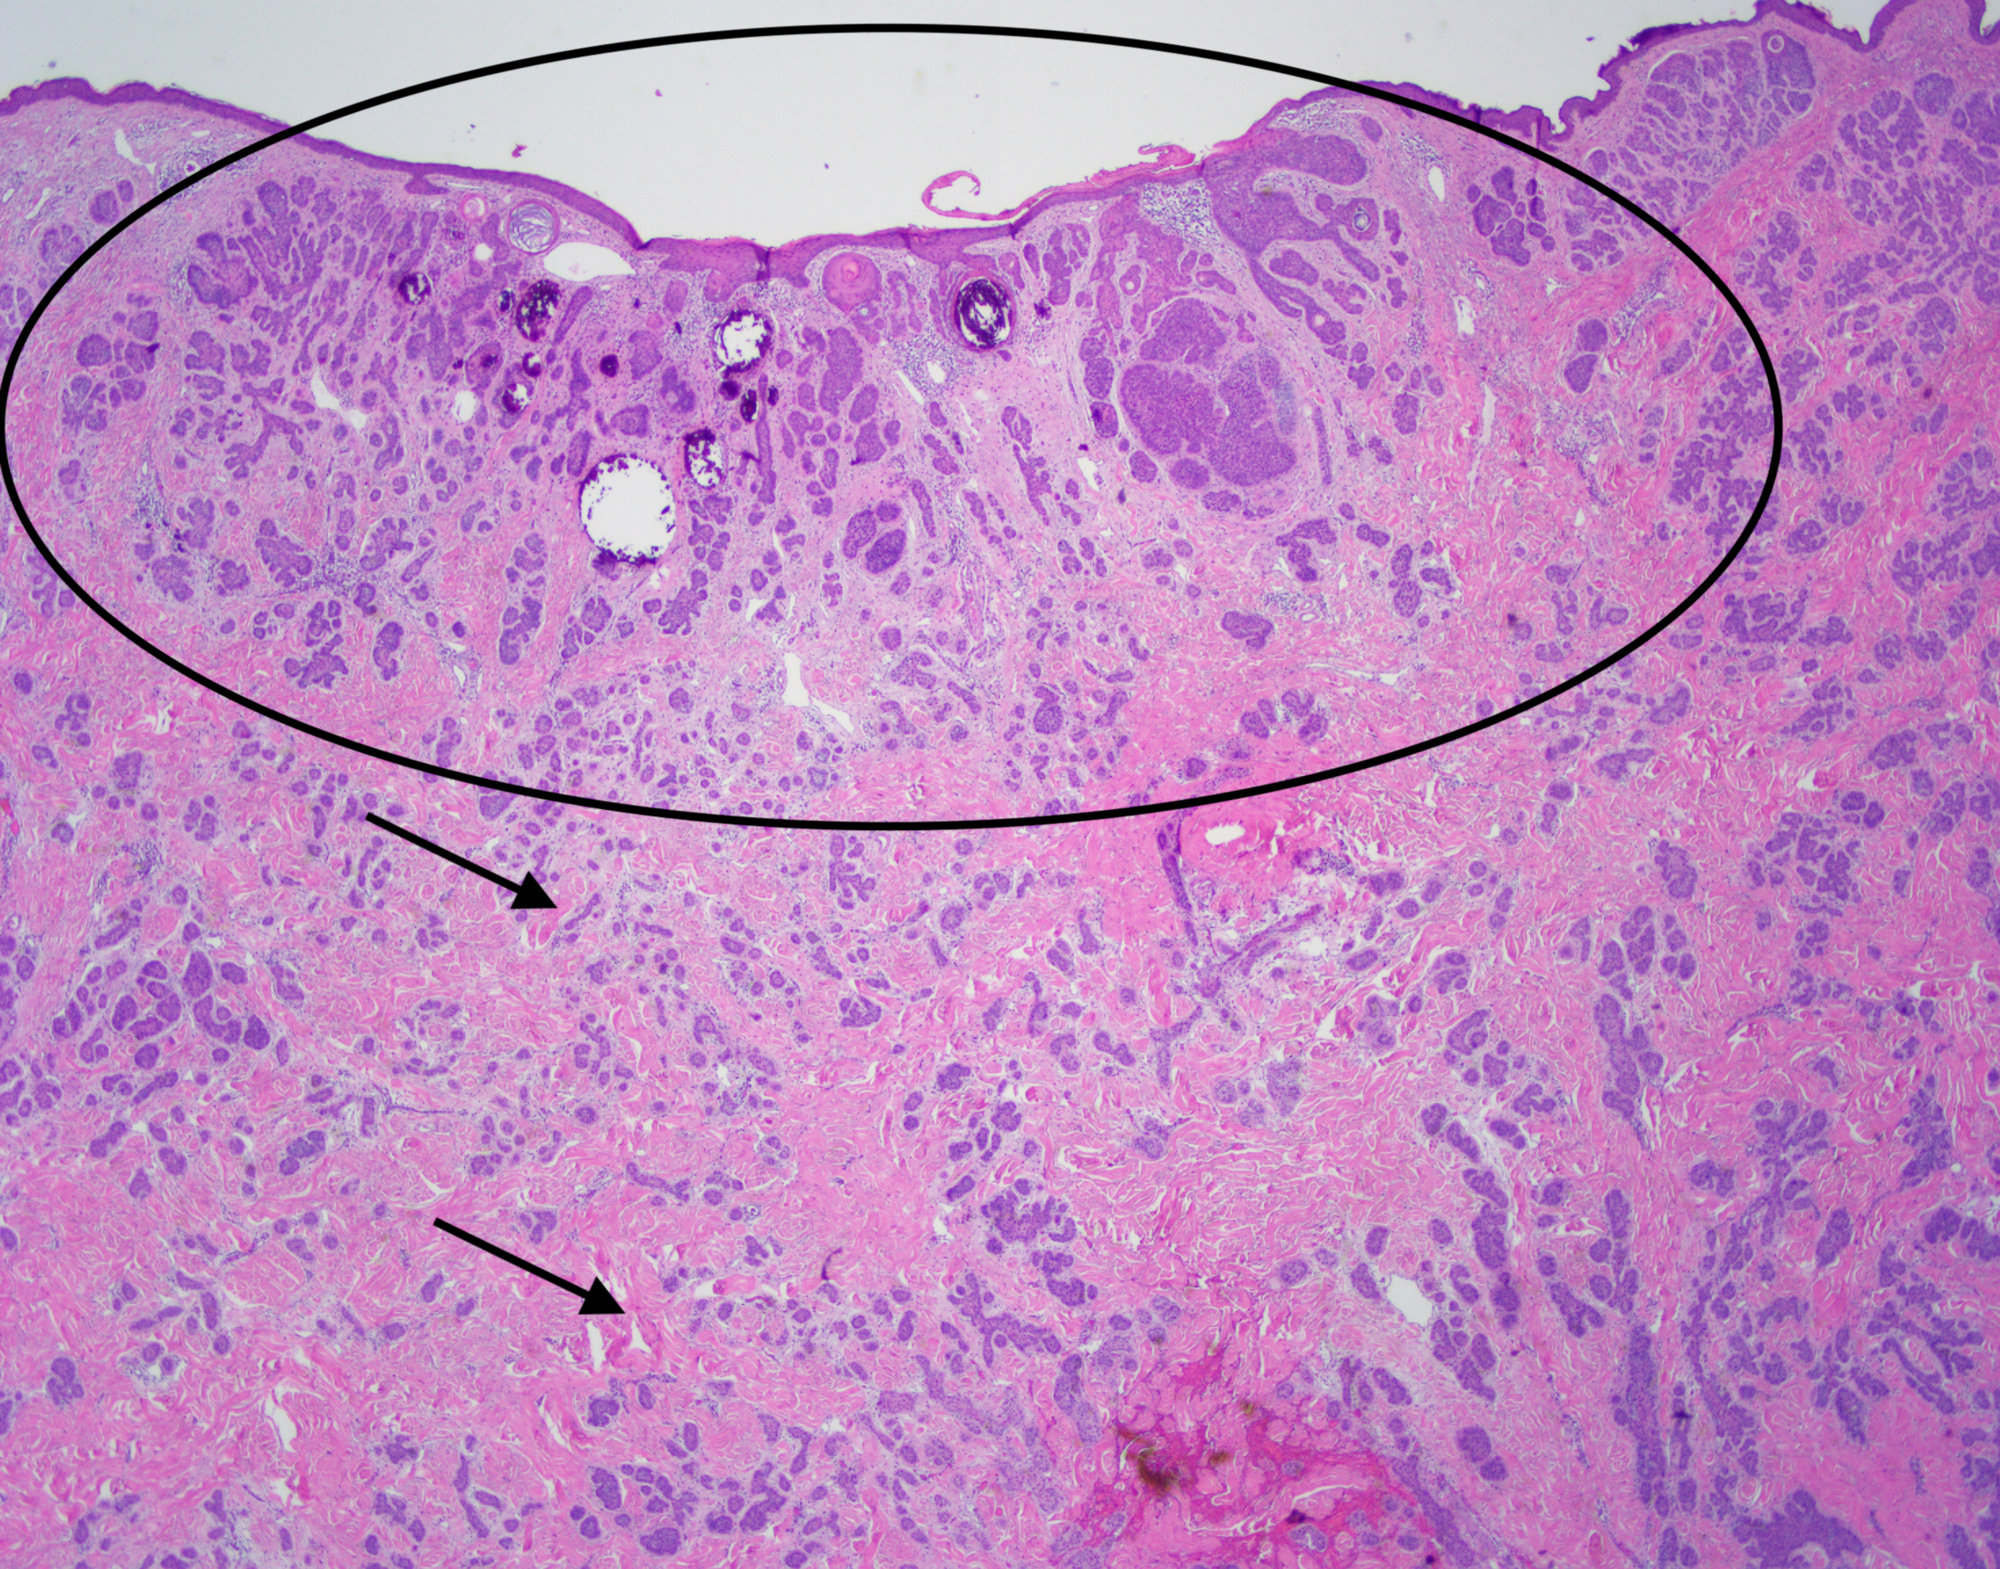 Cureus A Rare Presentation Of Basal Cell Carcinoma Arising